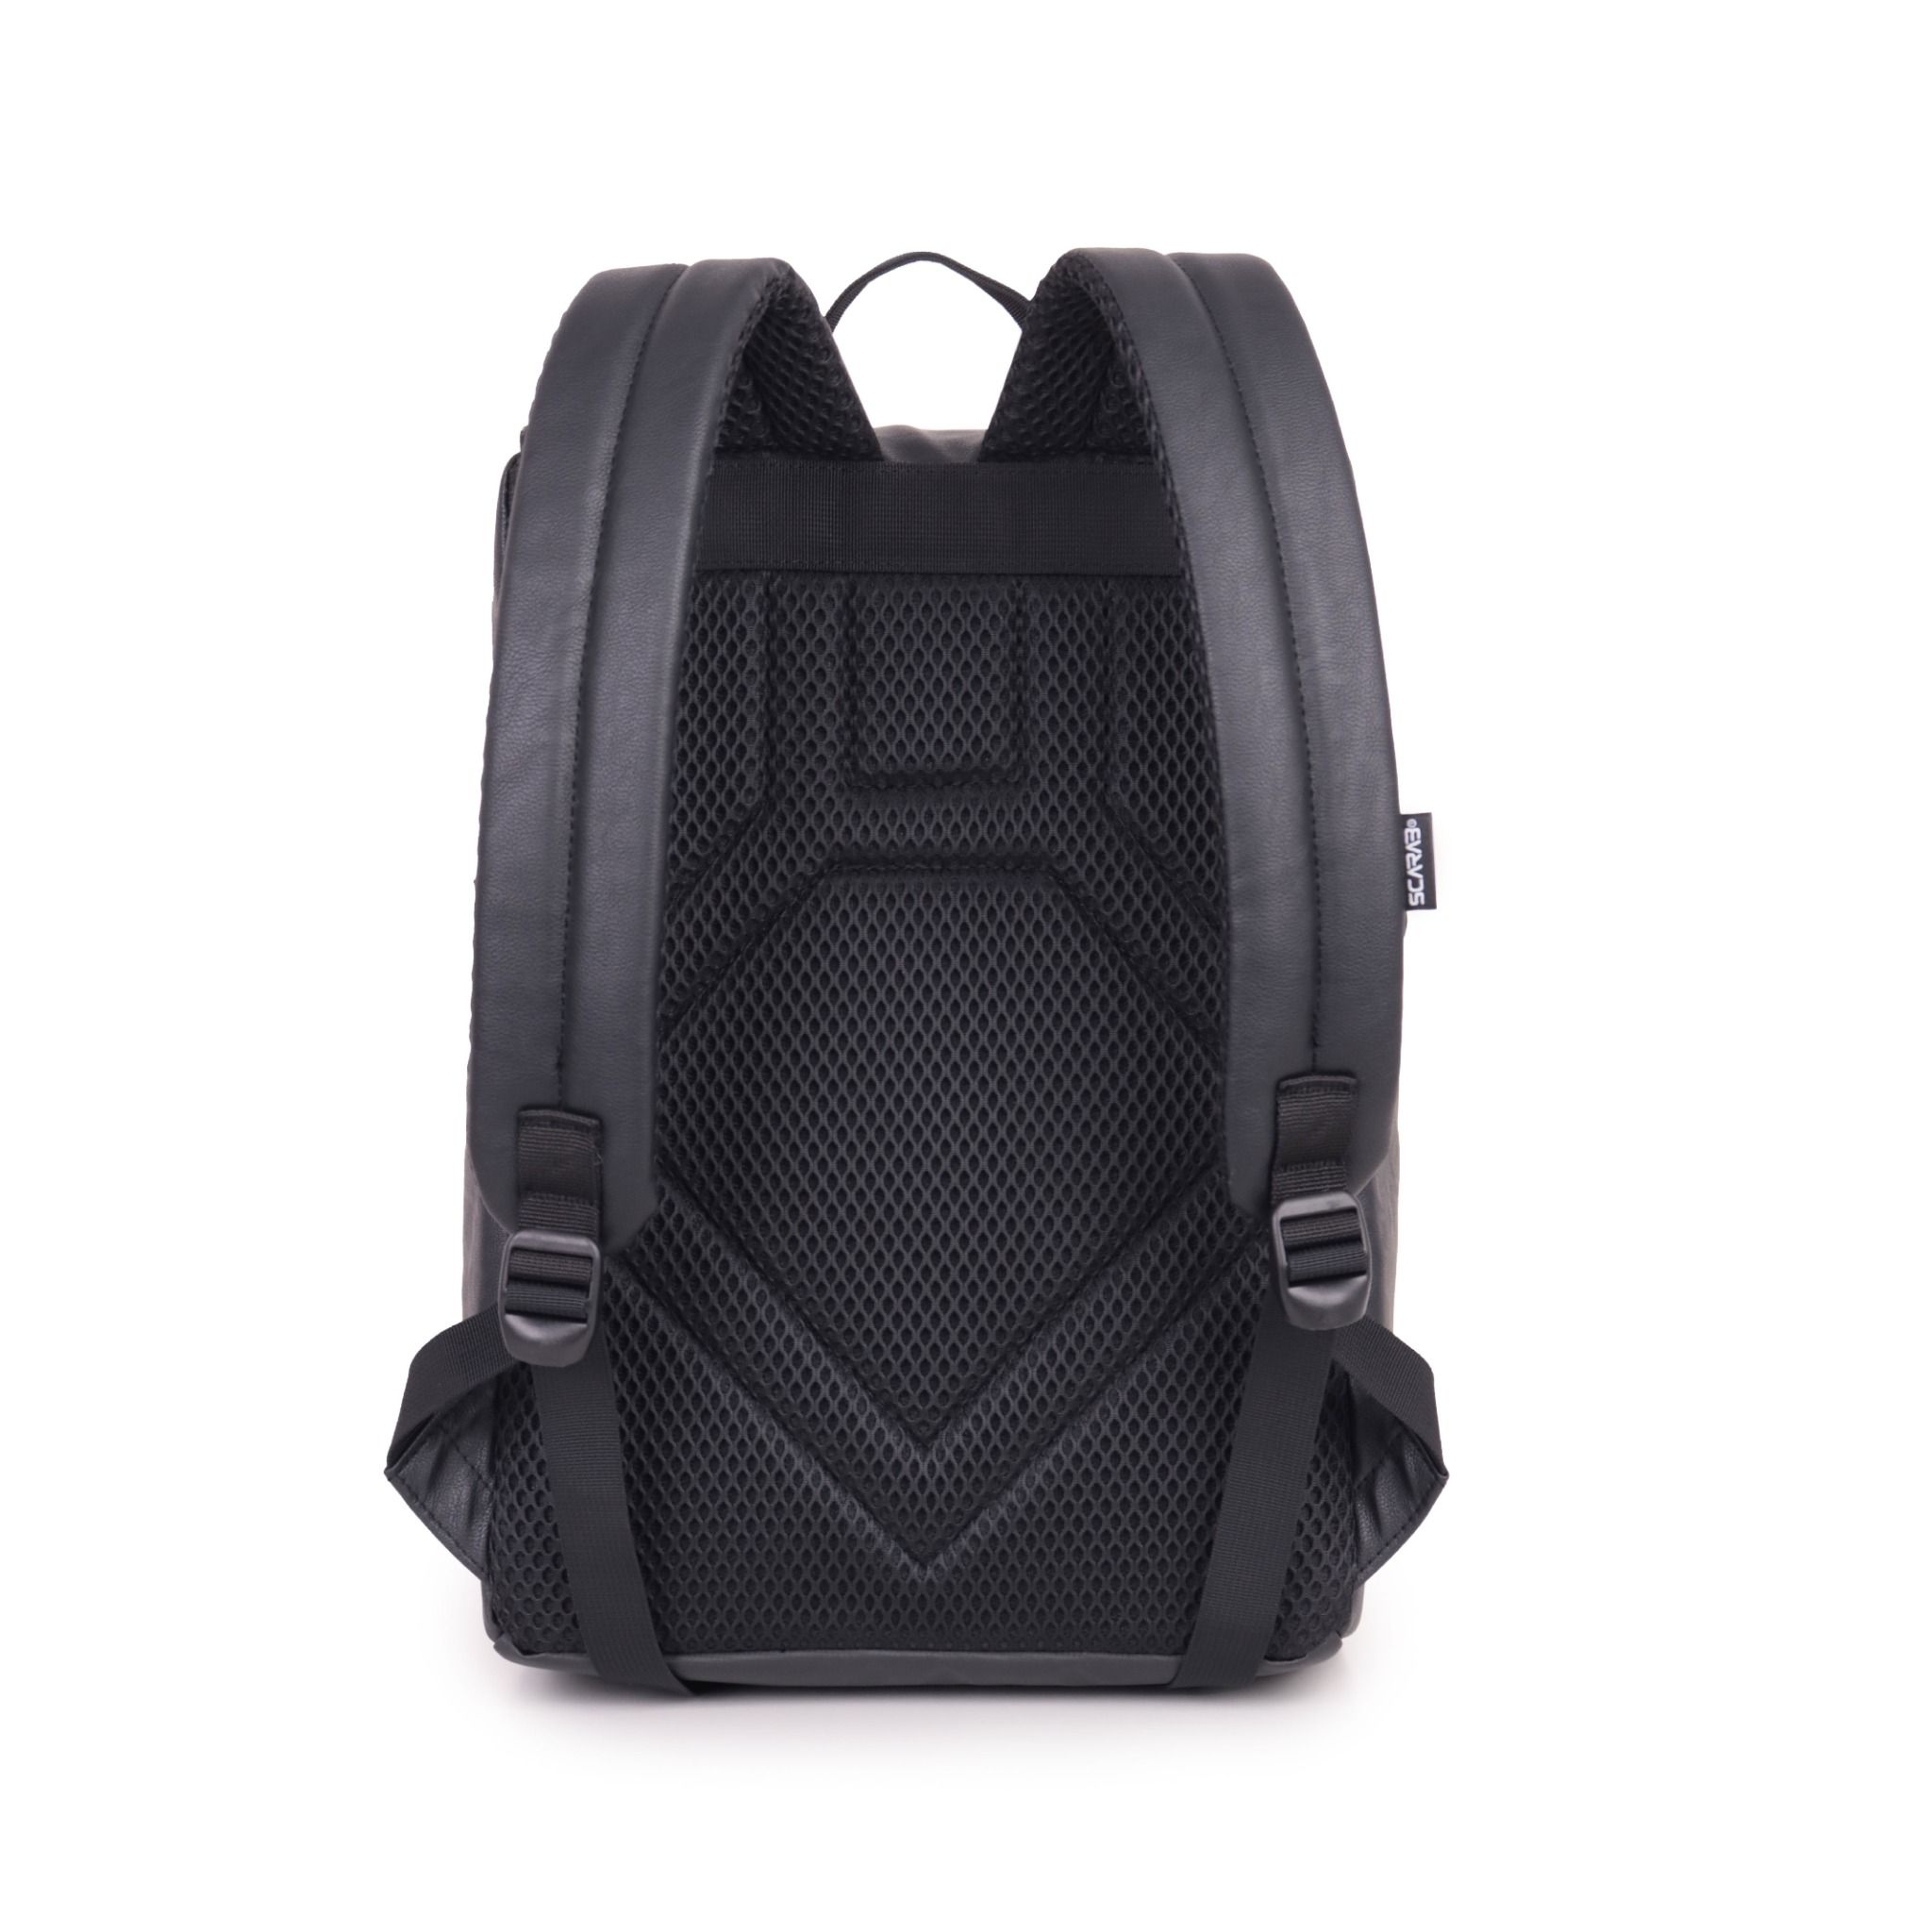  Urban Leather Backpack - Black Wrinkled 